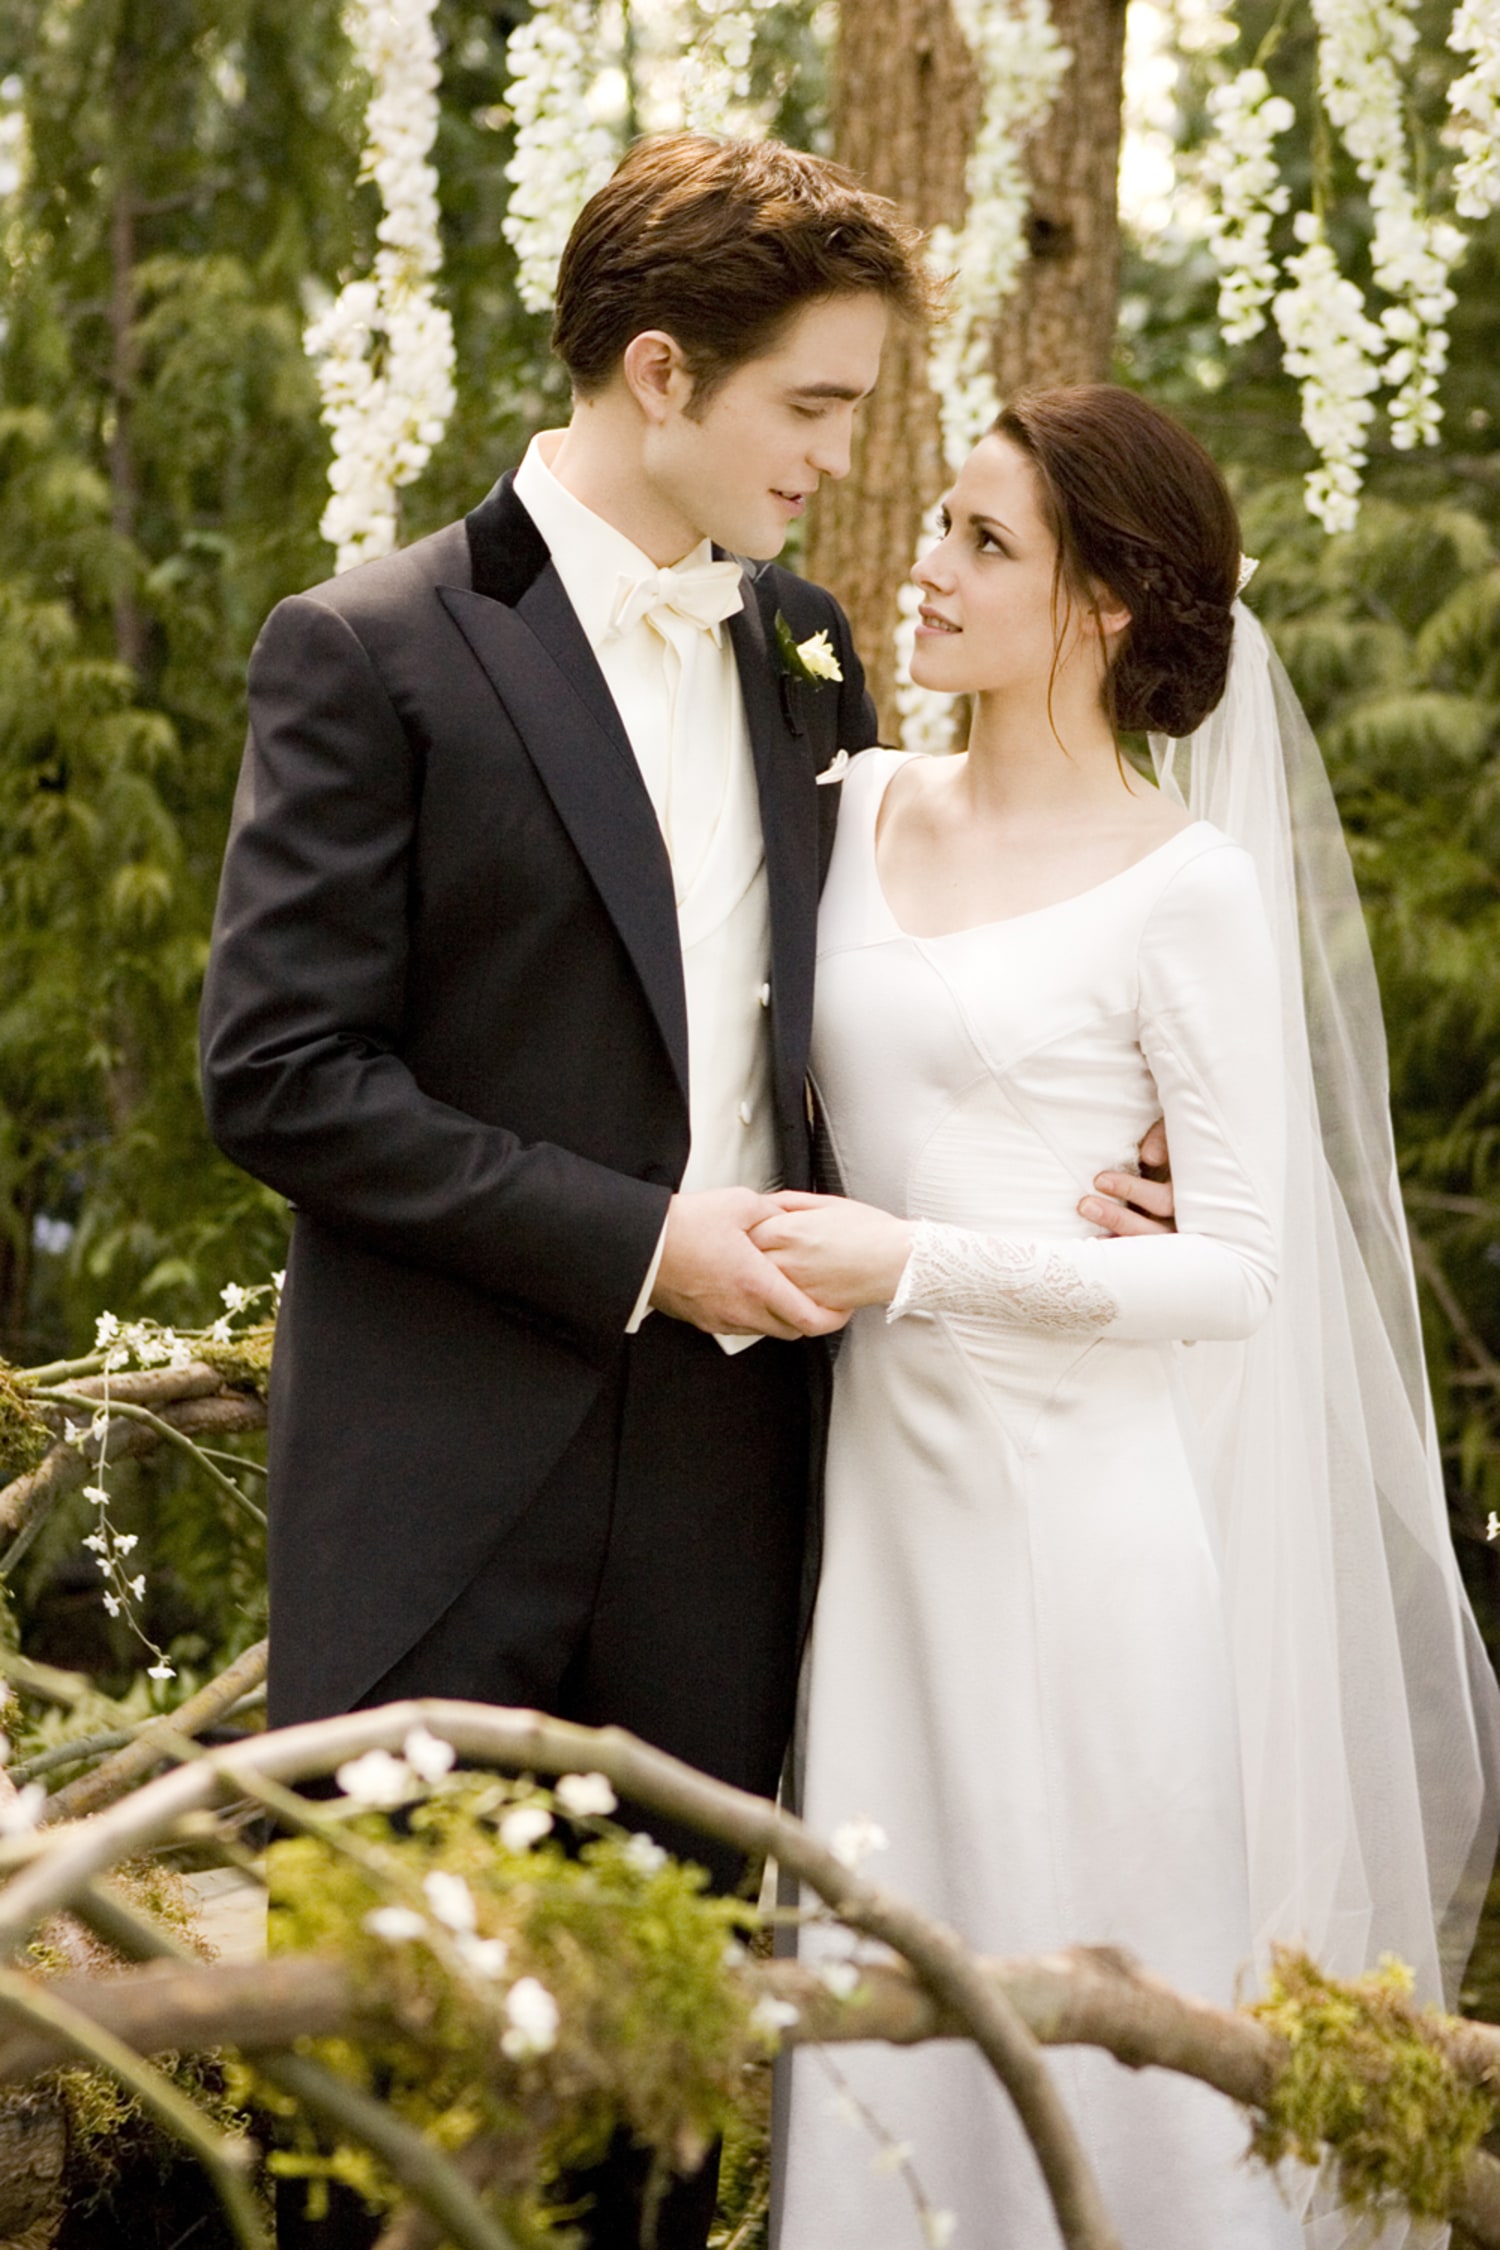 Twilight' wedding change names to Cullen